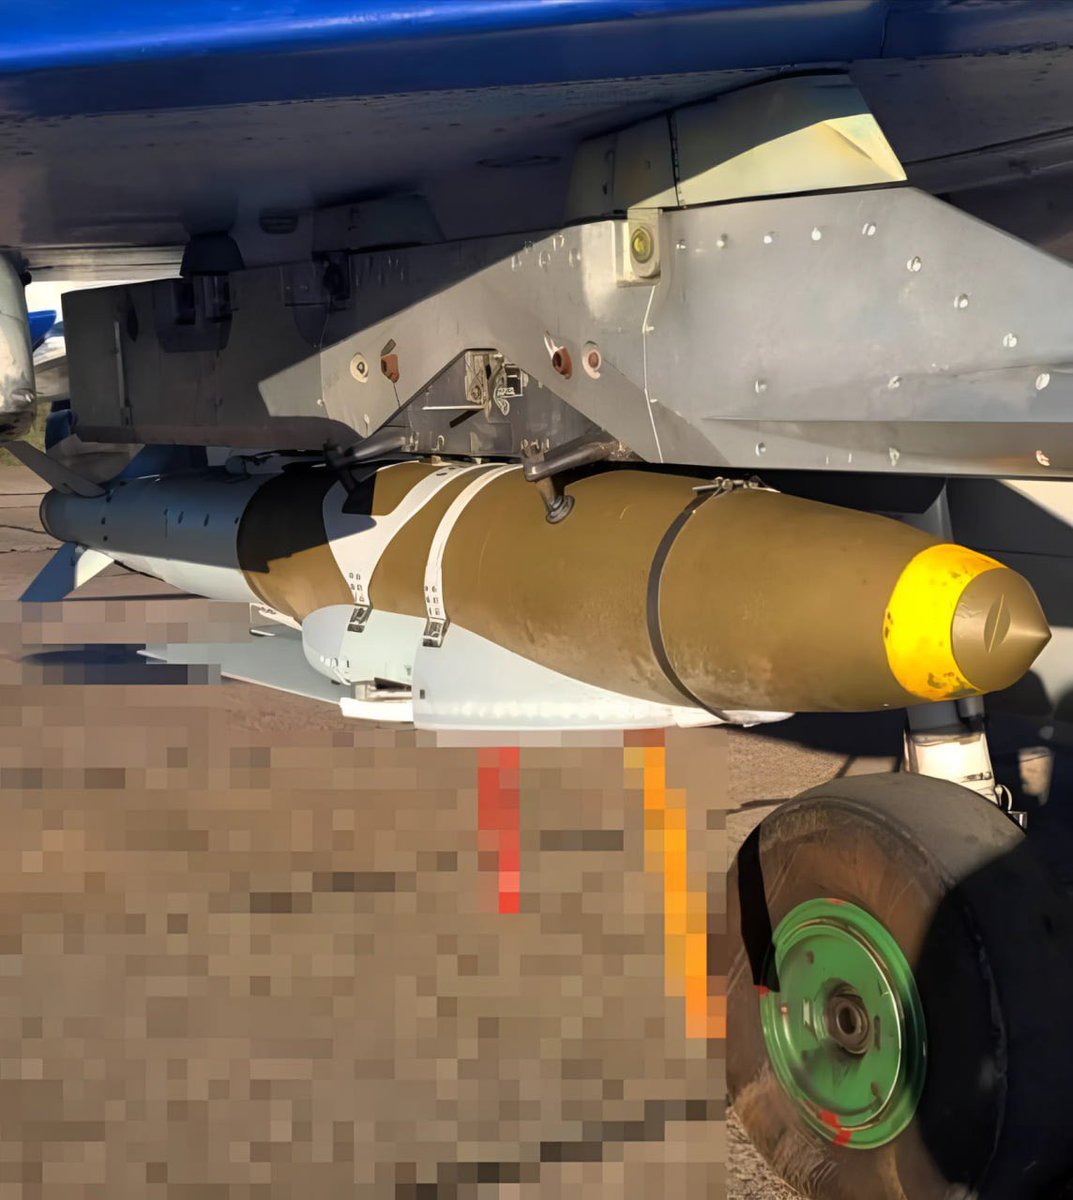 ⚡️A high-precision 🇺🇸JDAM aerial bomb on the suspension of a 🇺🇦Ukrainian MiG-29 fighter